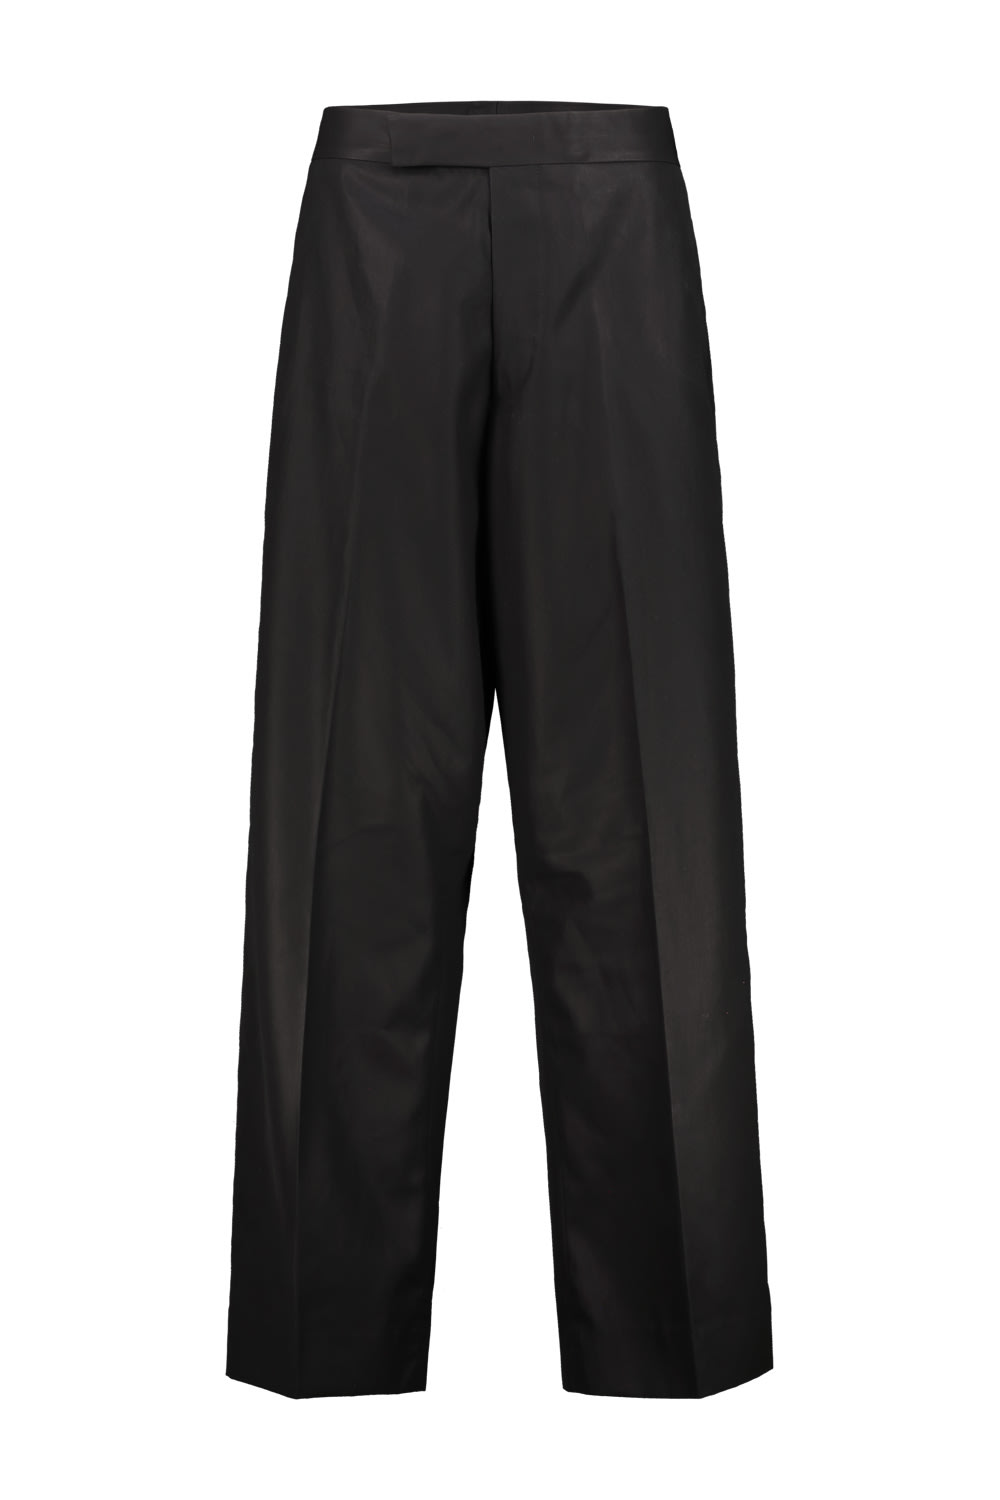 Sapio N°10 Trouser In Black